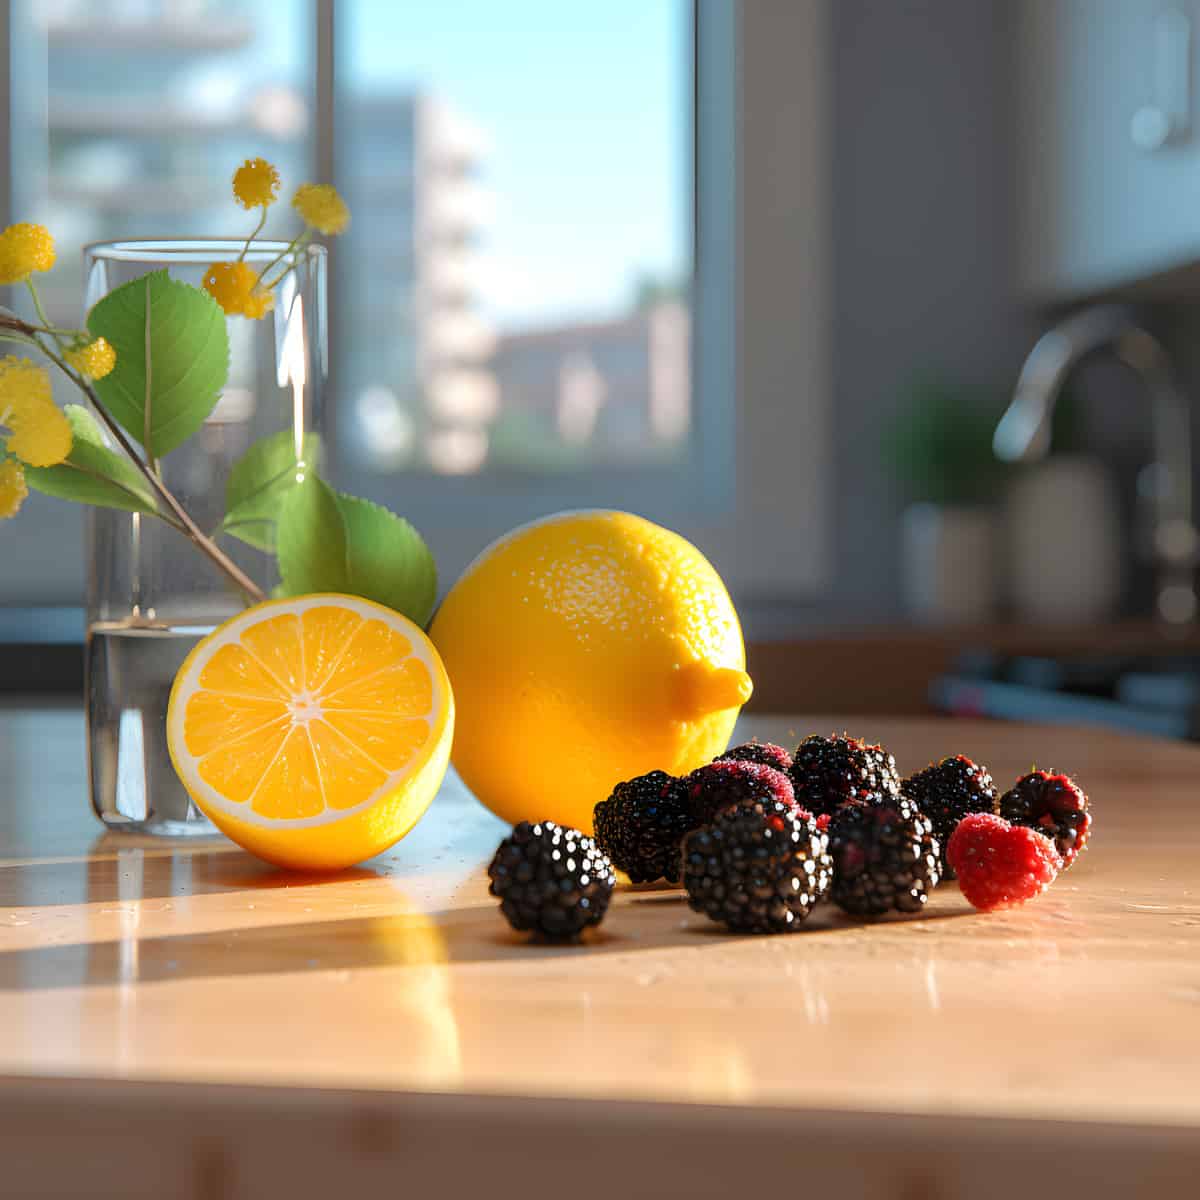 Lemonadeberry Fruit on a kitchen counter